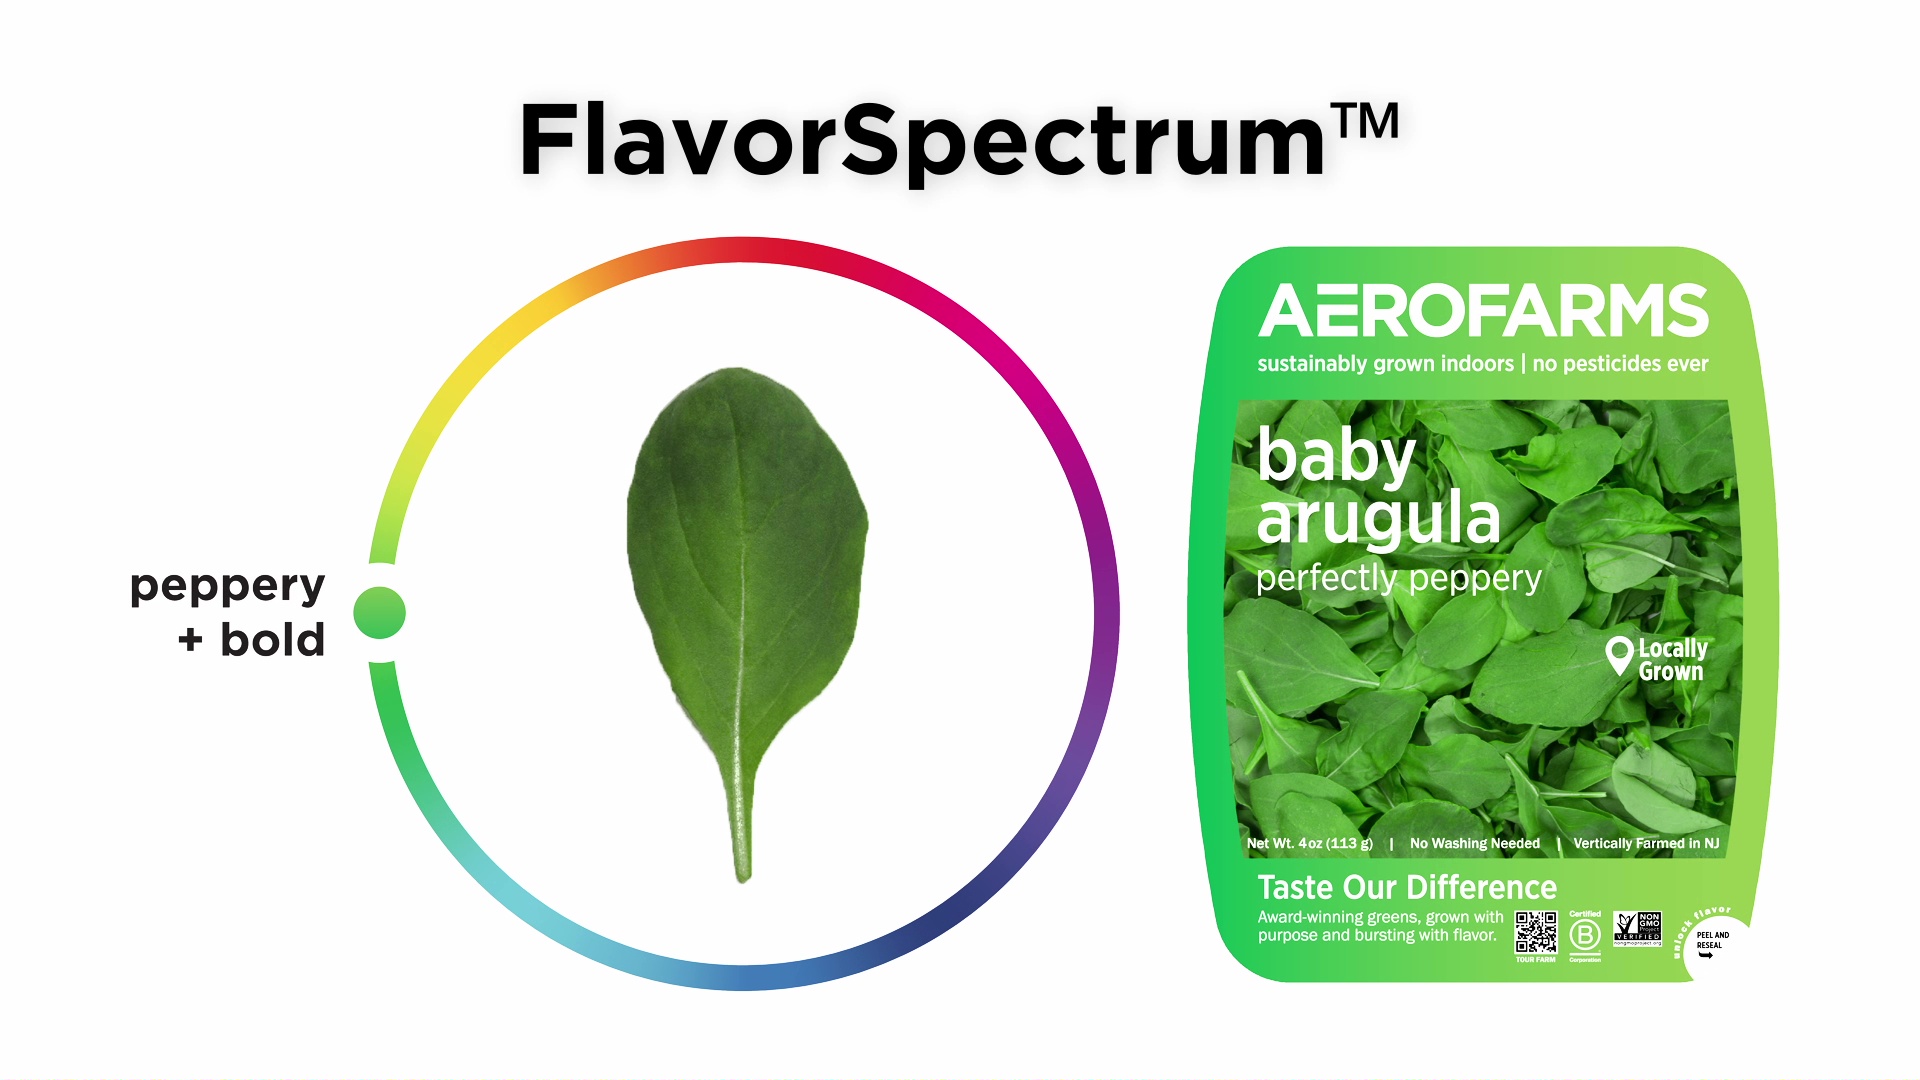 AeroFarms: FlavorSpectrum